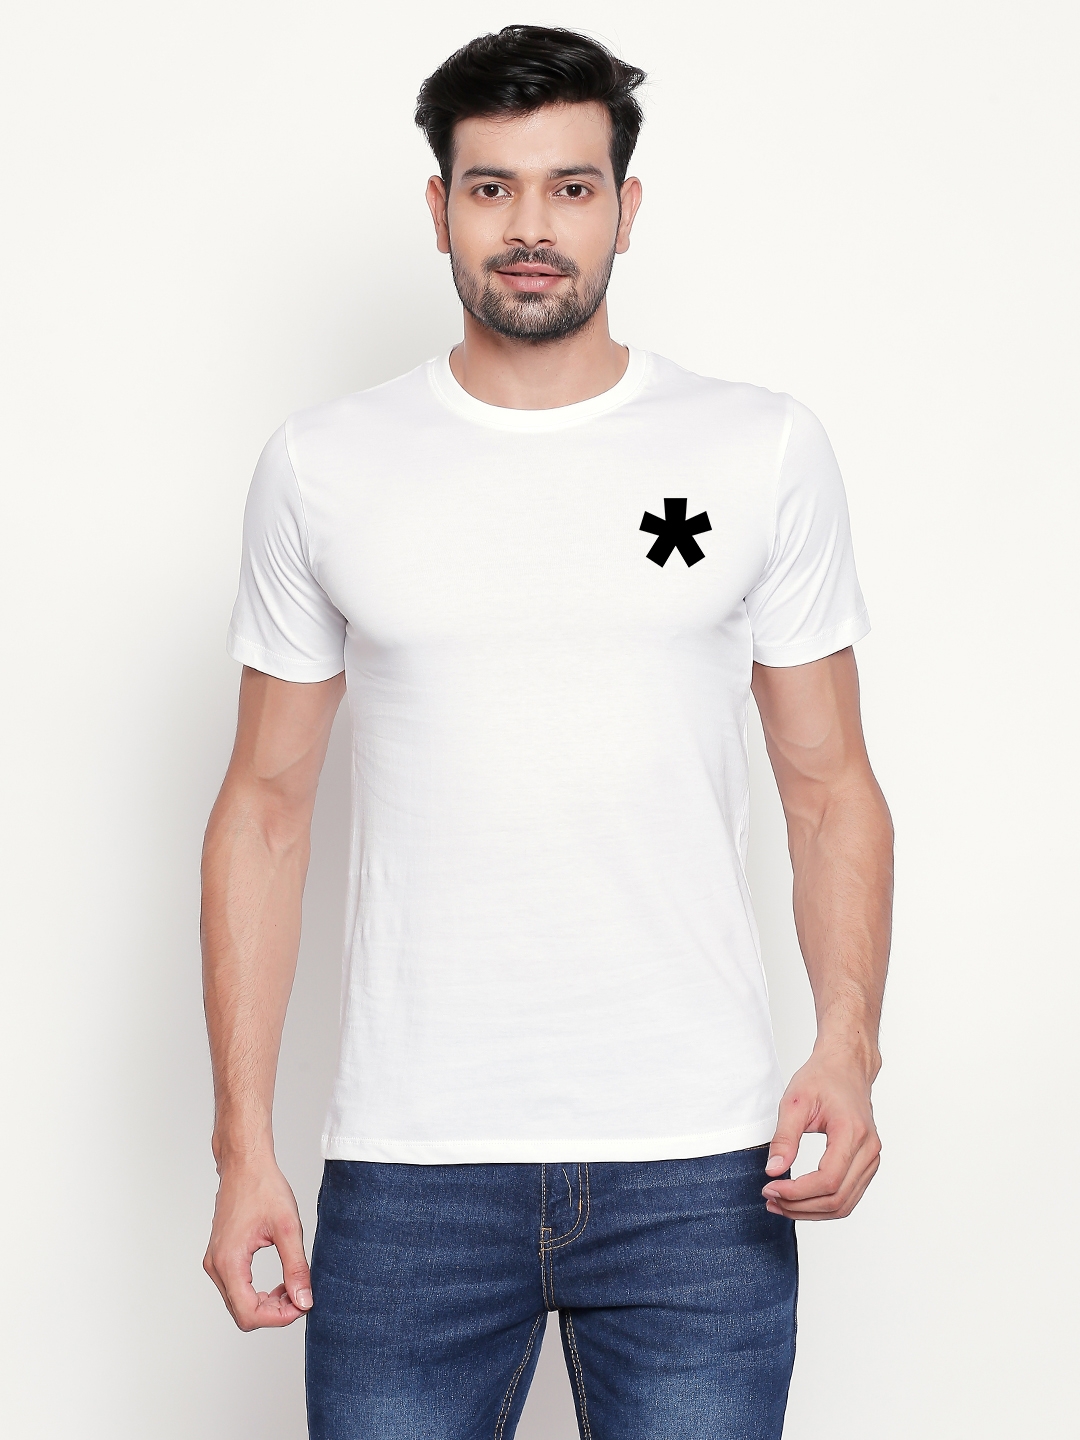 creativeideas.store | Asterisk White Tshirt